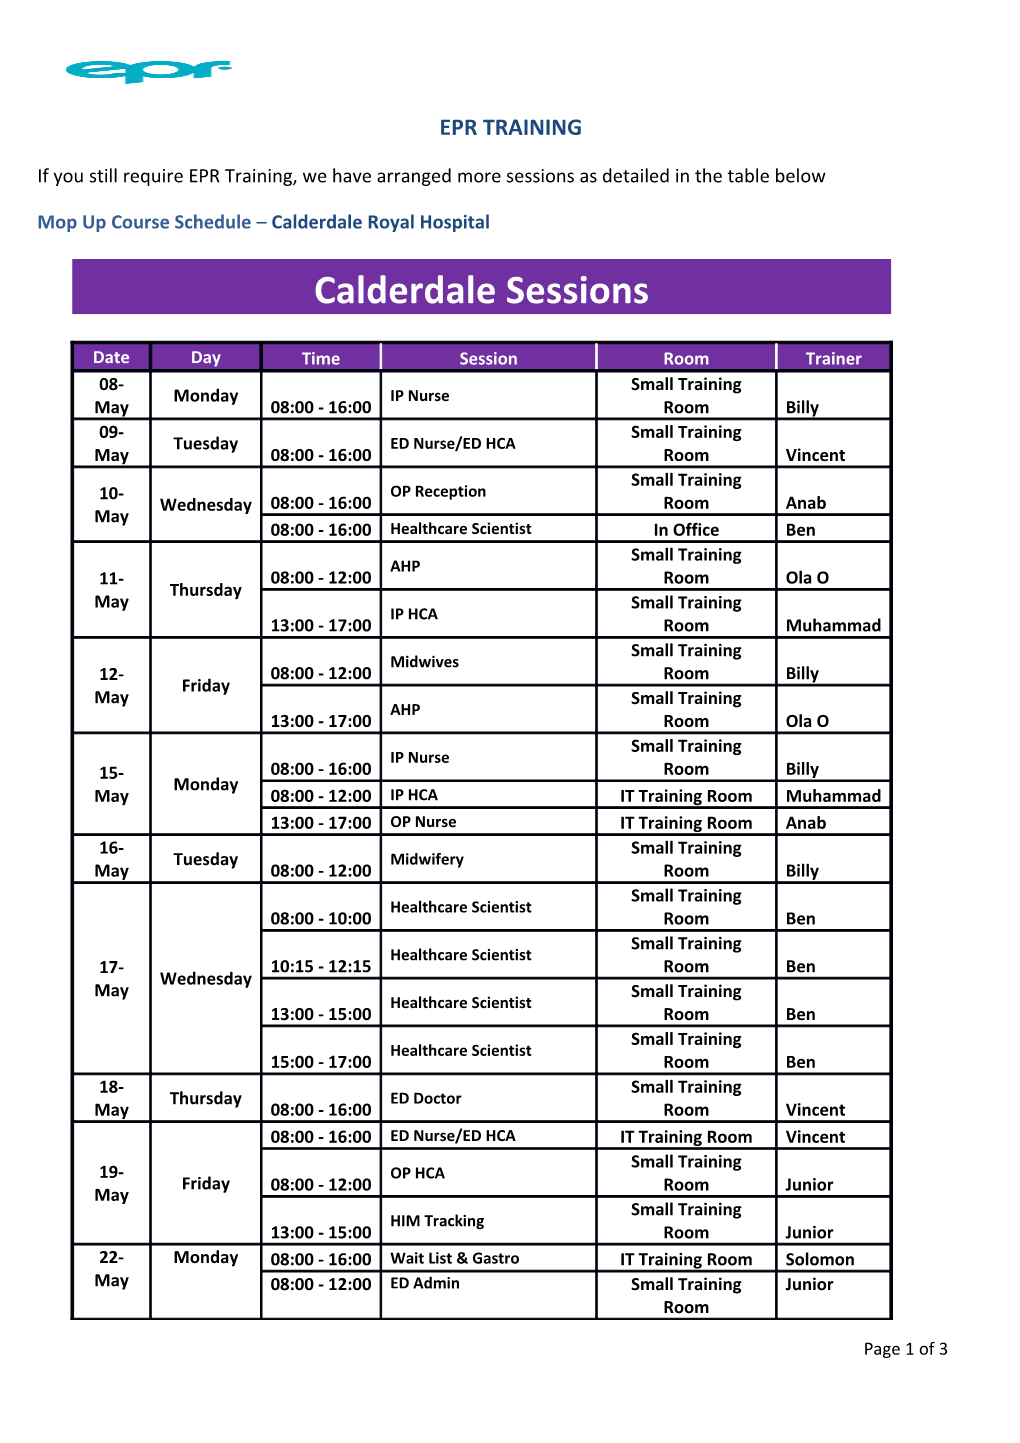 Mop up Course Schedule Calderdale Royal Hospital